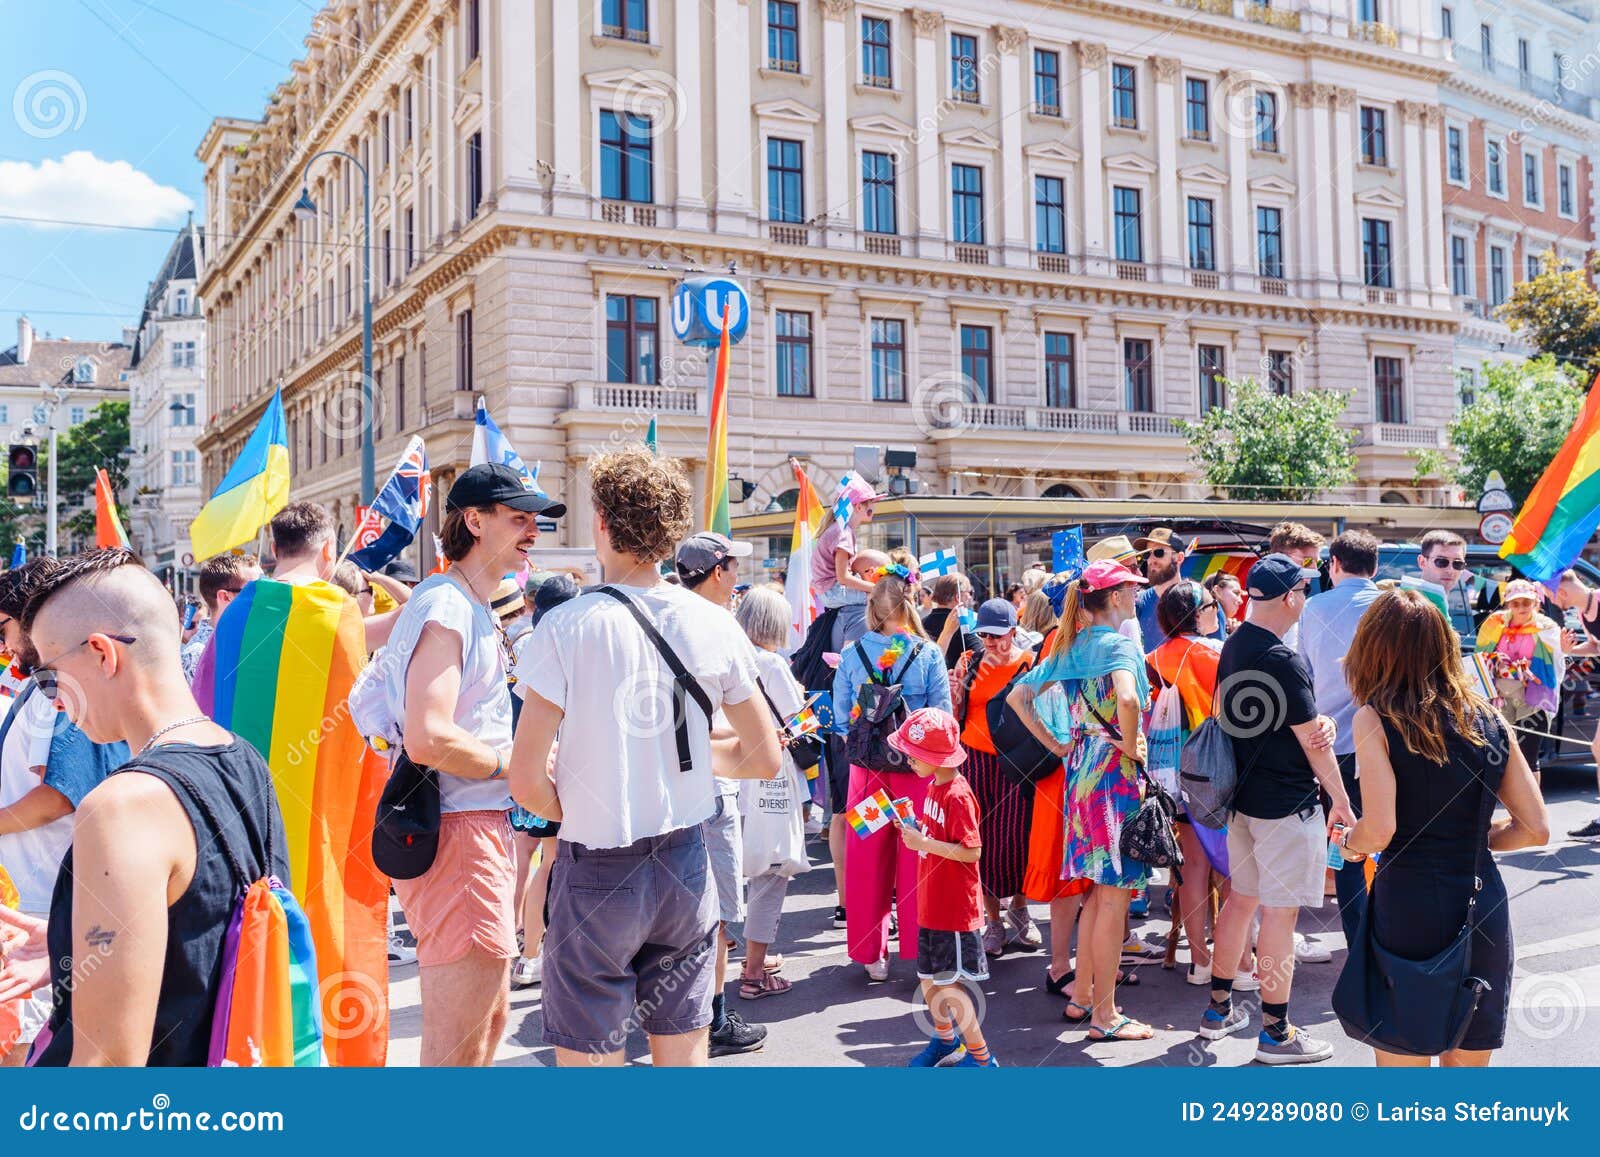 Vienna Pride and Rainbow Parade 2022 Editorial Image Image of june